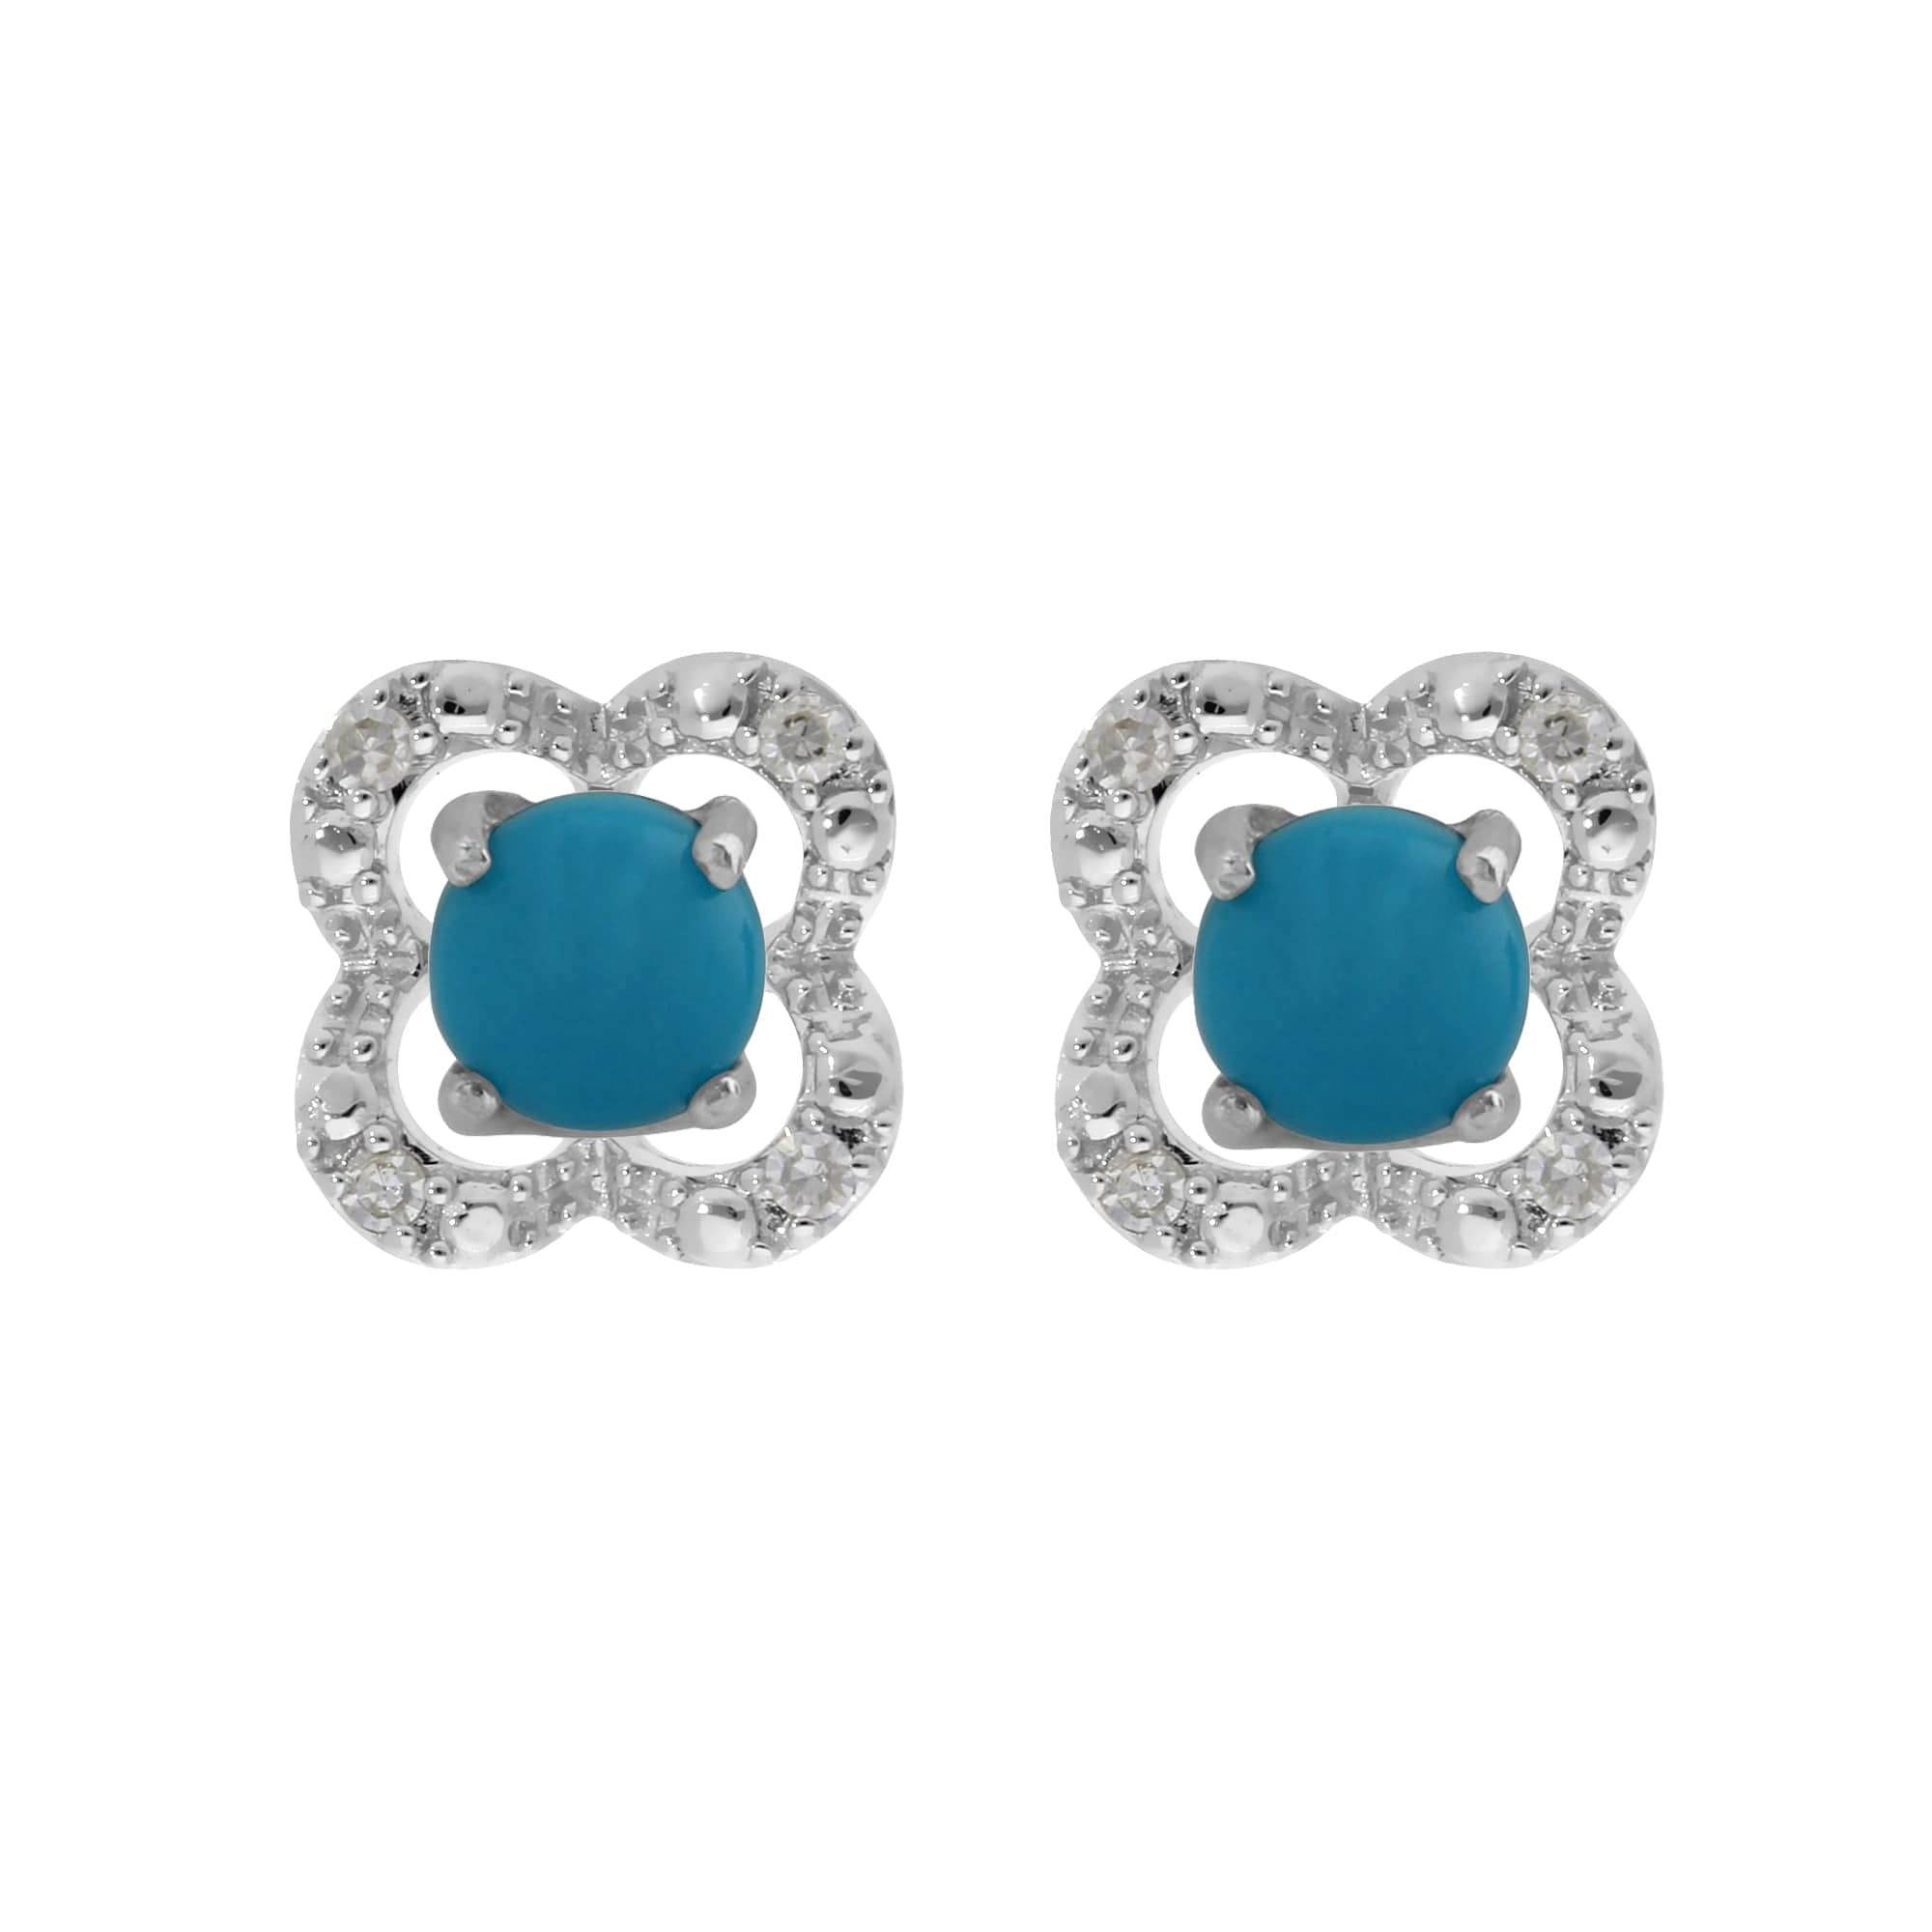 Classic Turquoise Stud Earrings & Diamond Flower Ear Jacket Image 1 